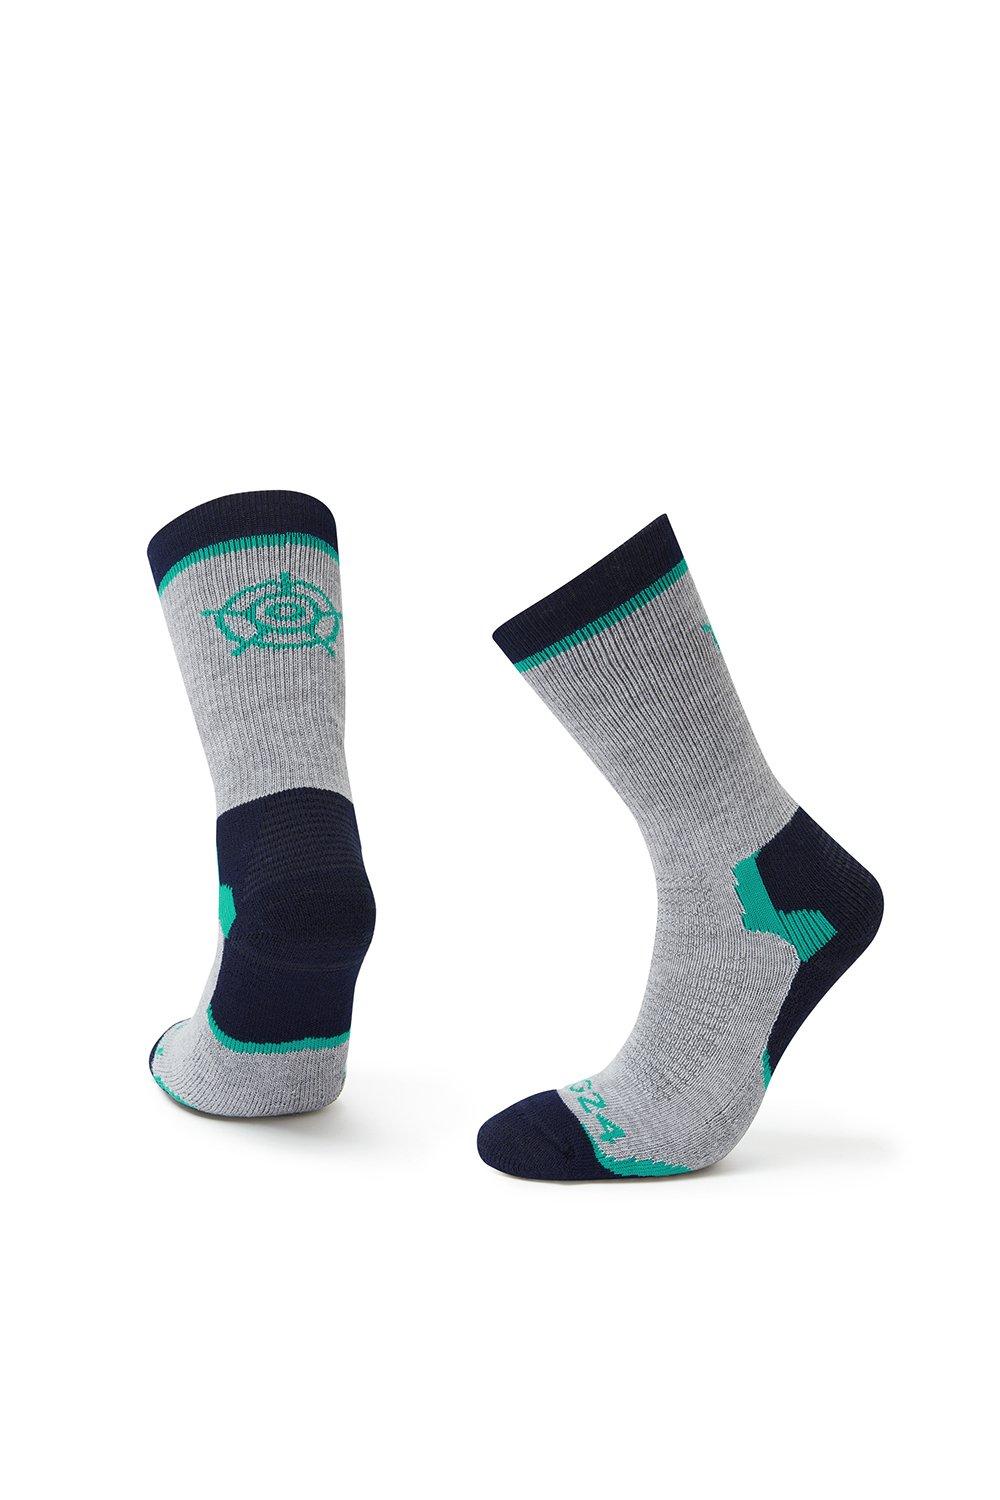 'Bishop' Coolmax Socks